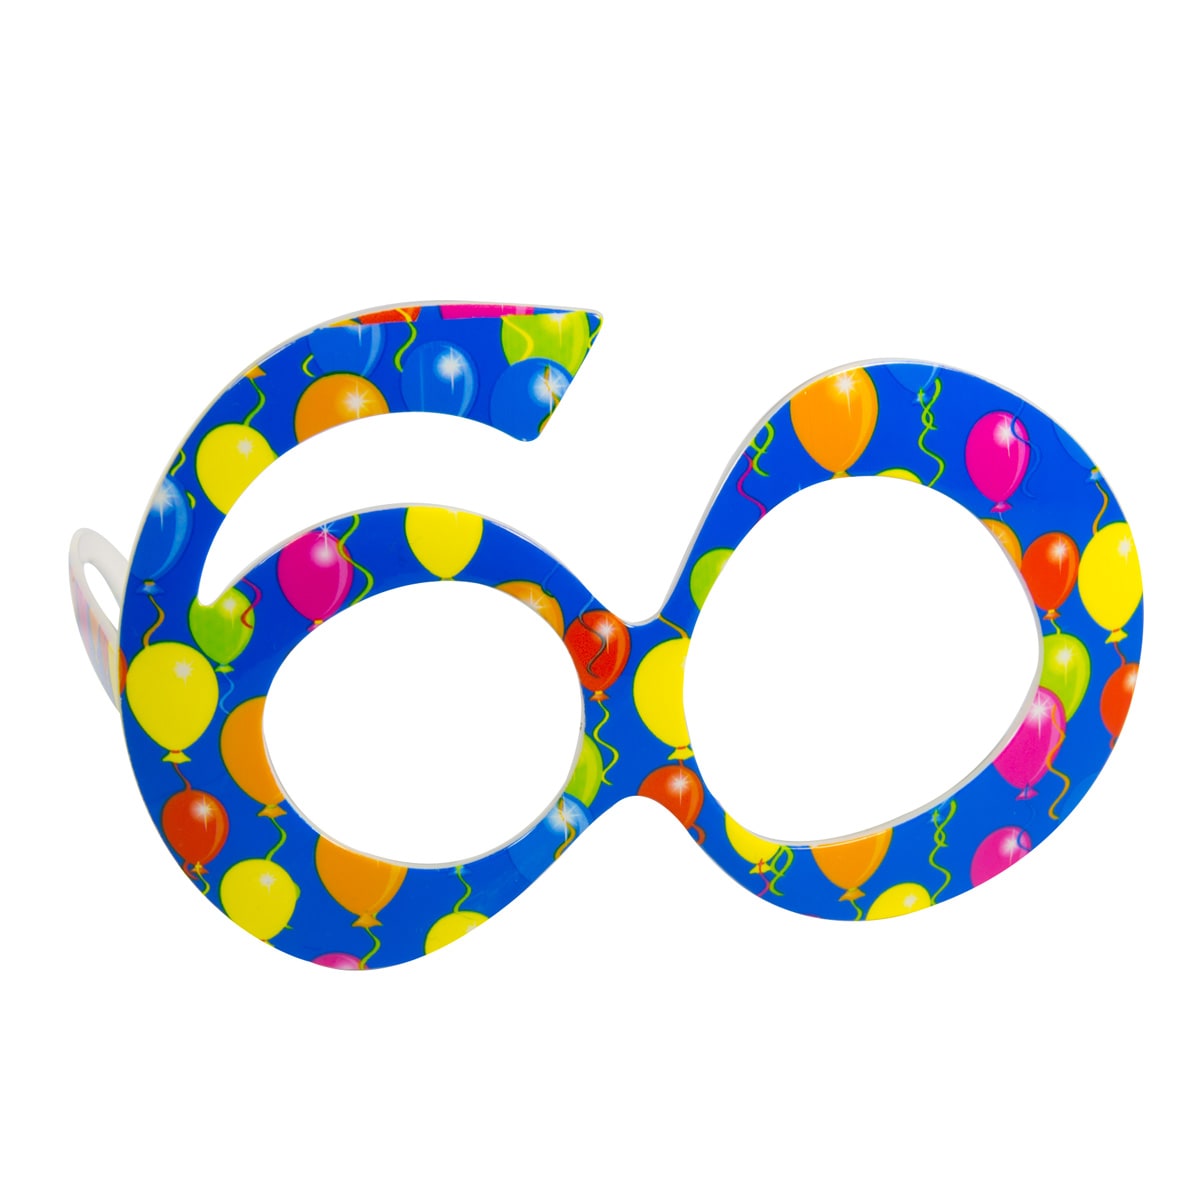 60 jaar ballonnen feest bril blauw